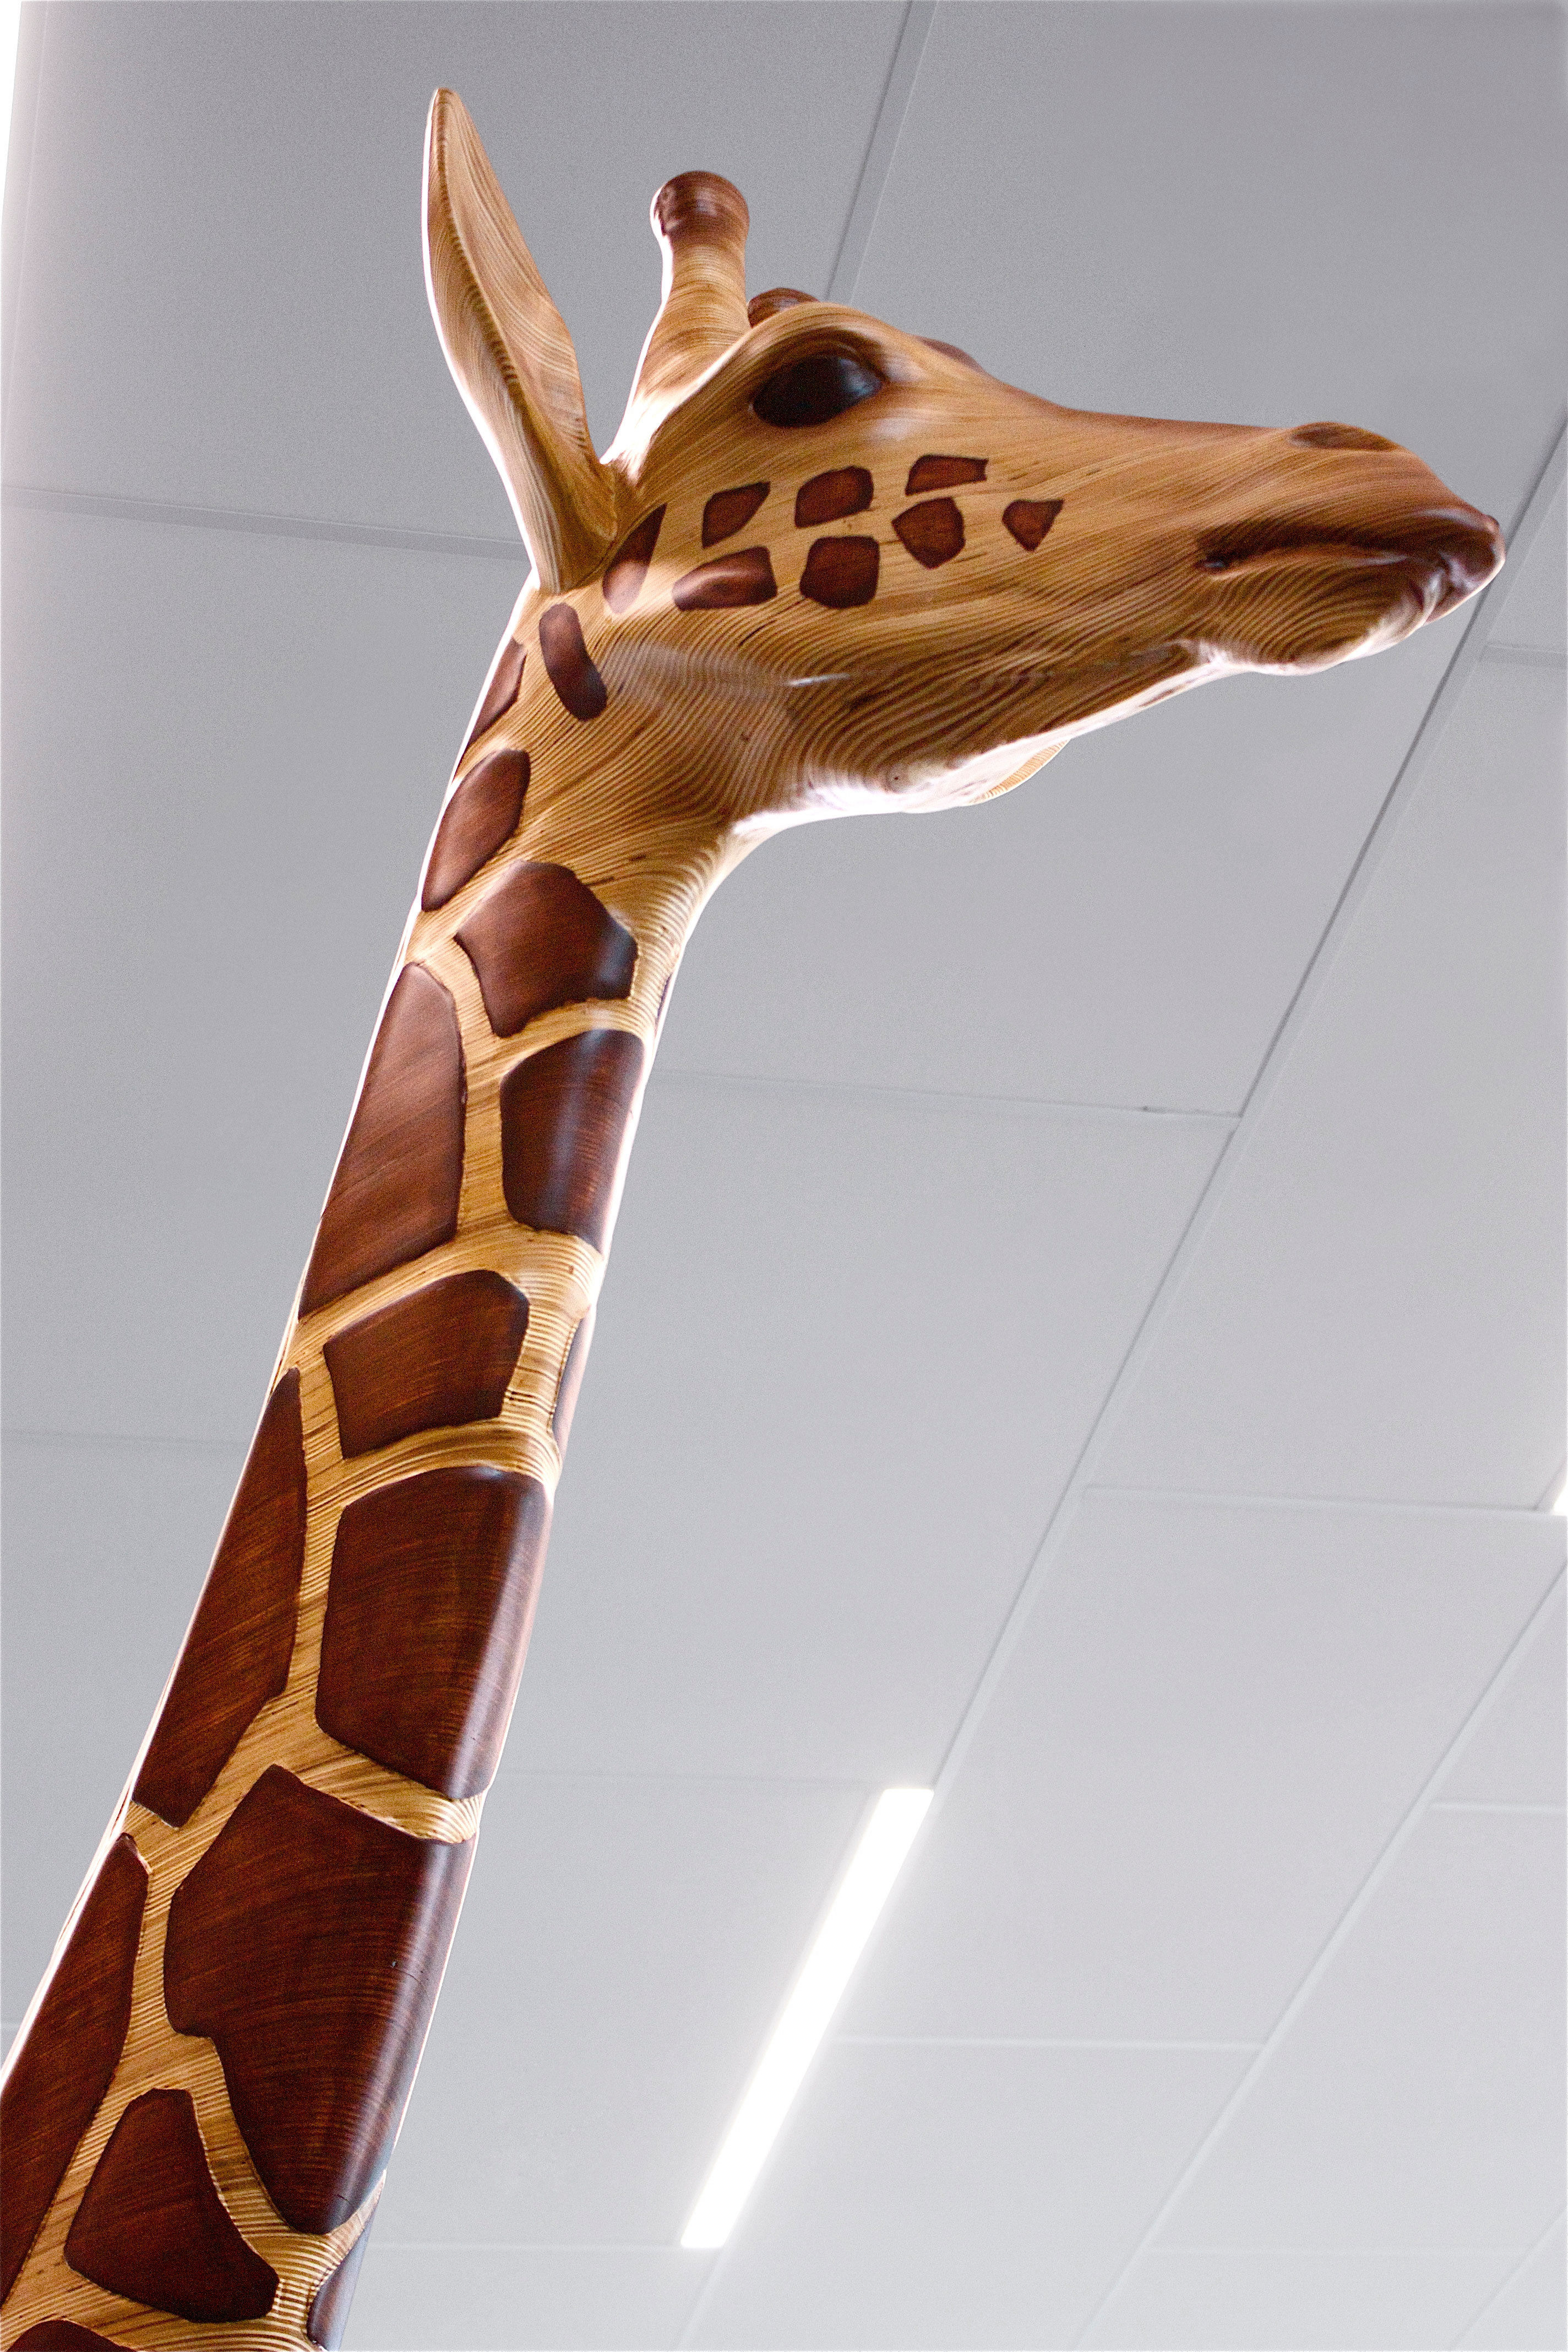 Toeval Demon transactie Reticulated Giraffe | Placzek Studios